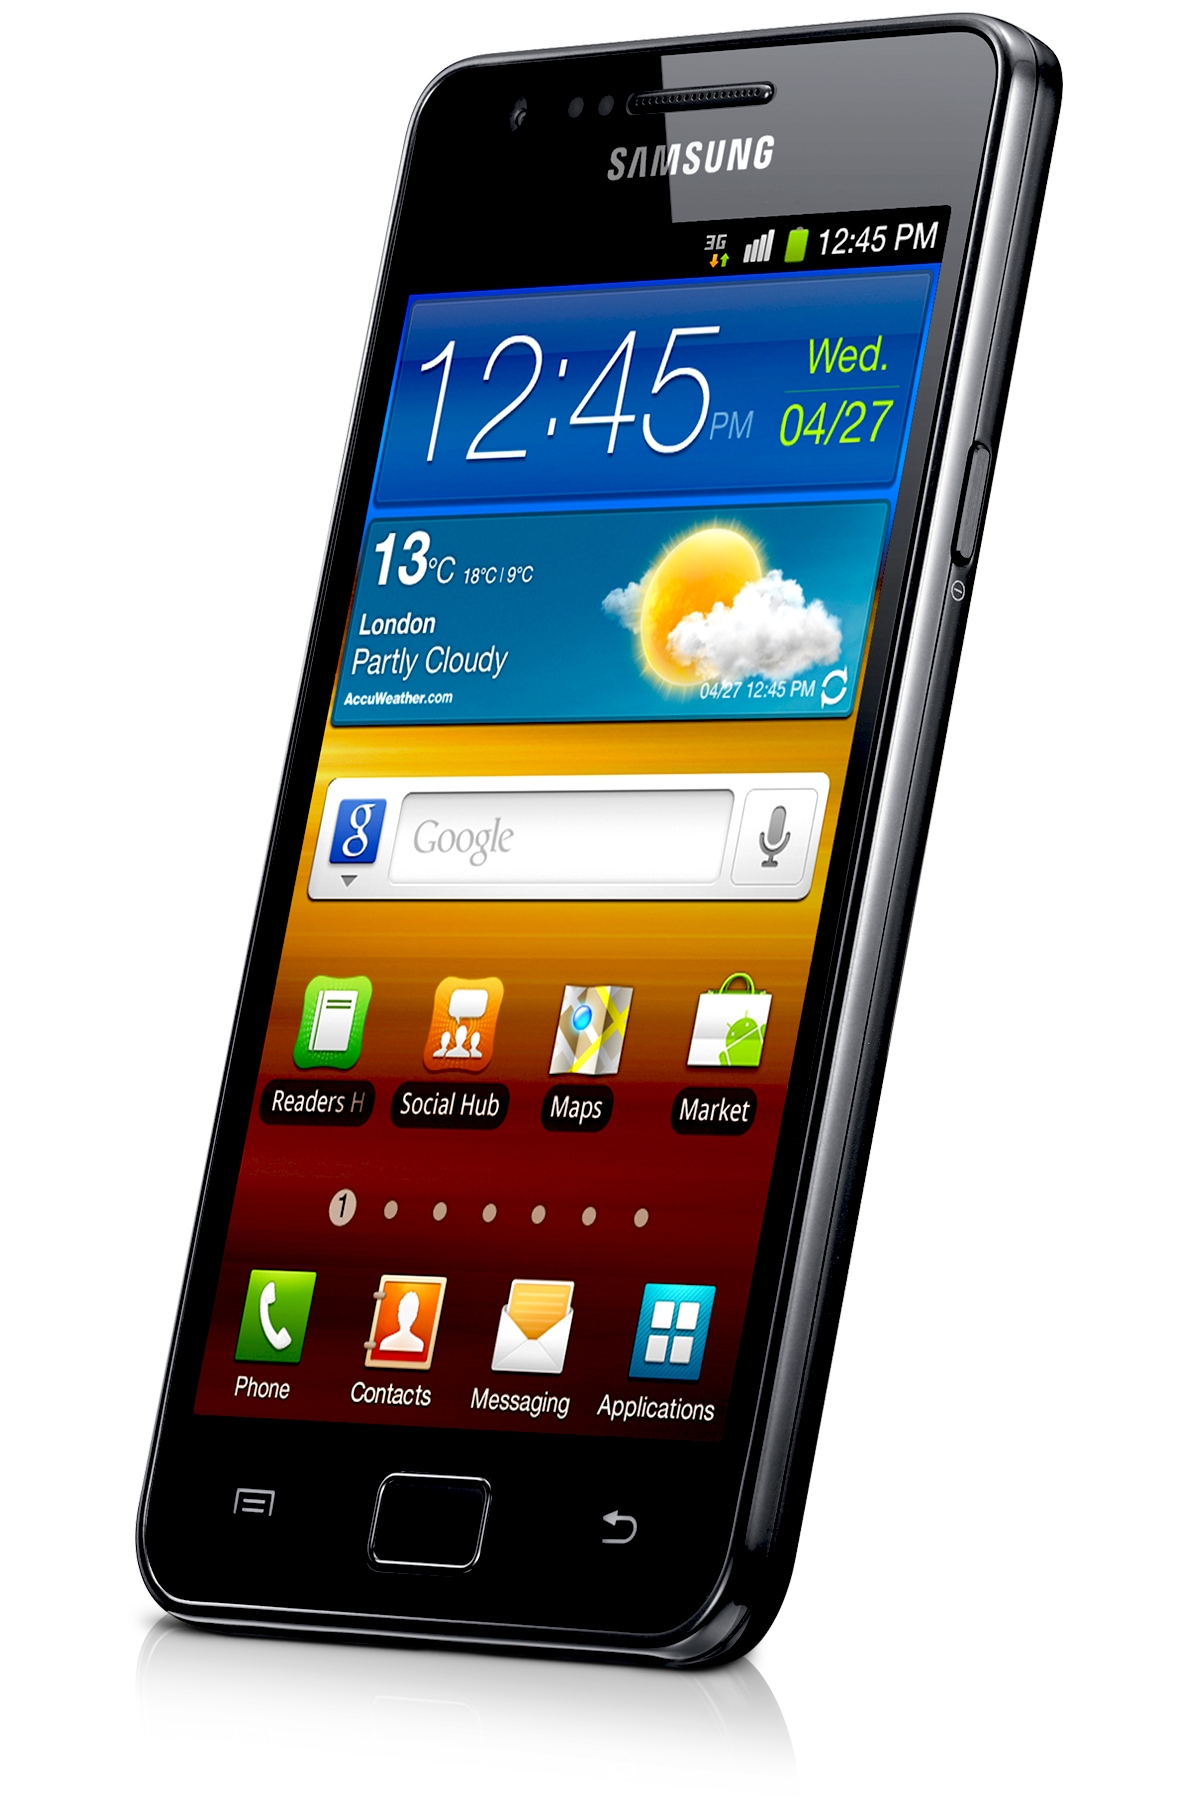 Samsung Galaxy S2 Smartphone | 5.5” Display | Features | Black1200 x 1800